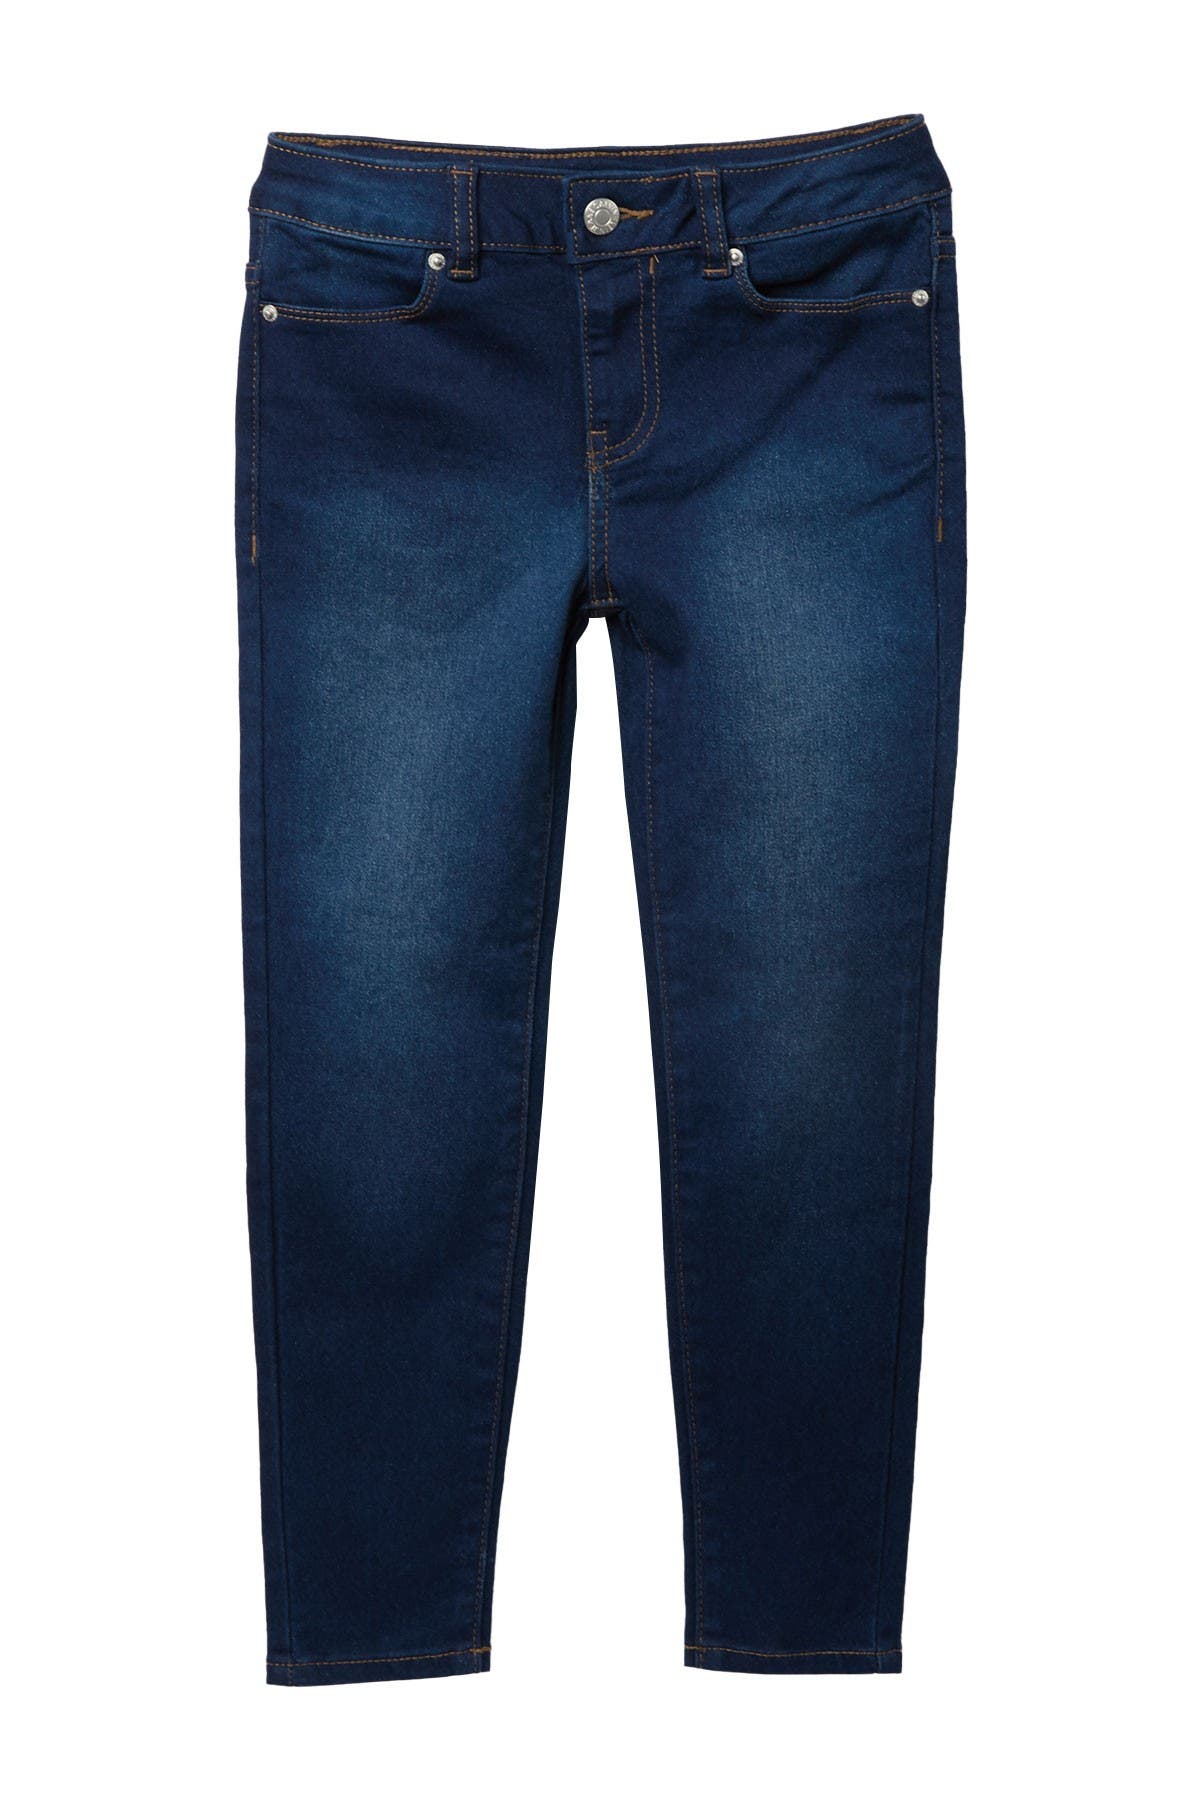 calvin klein ultimate skinny jeans blue